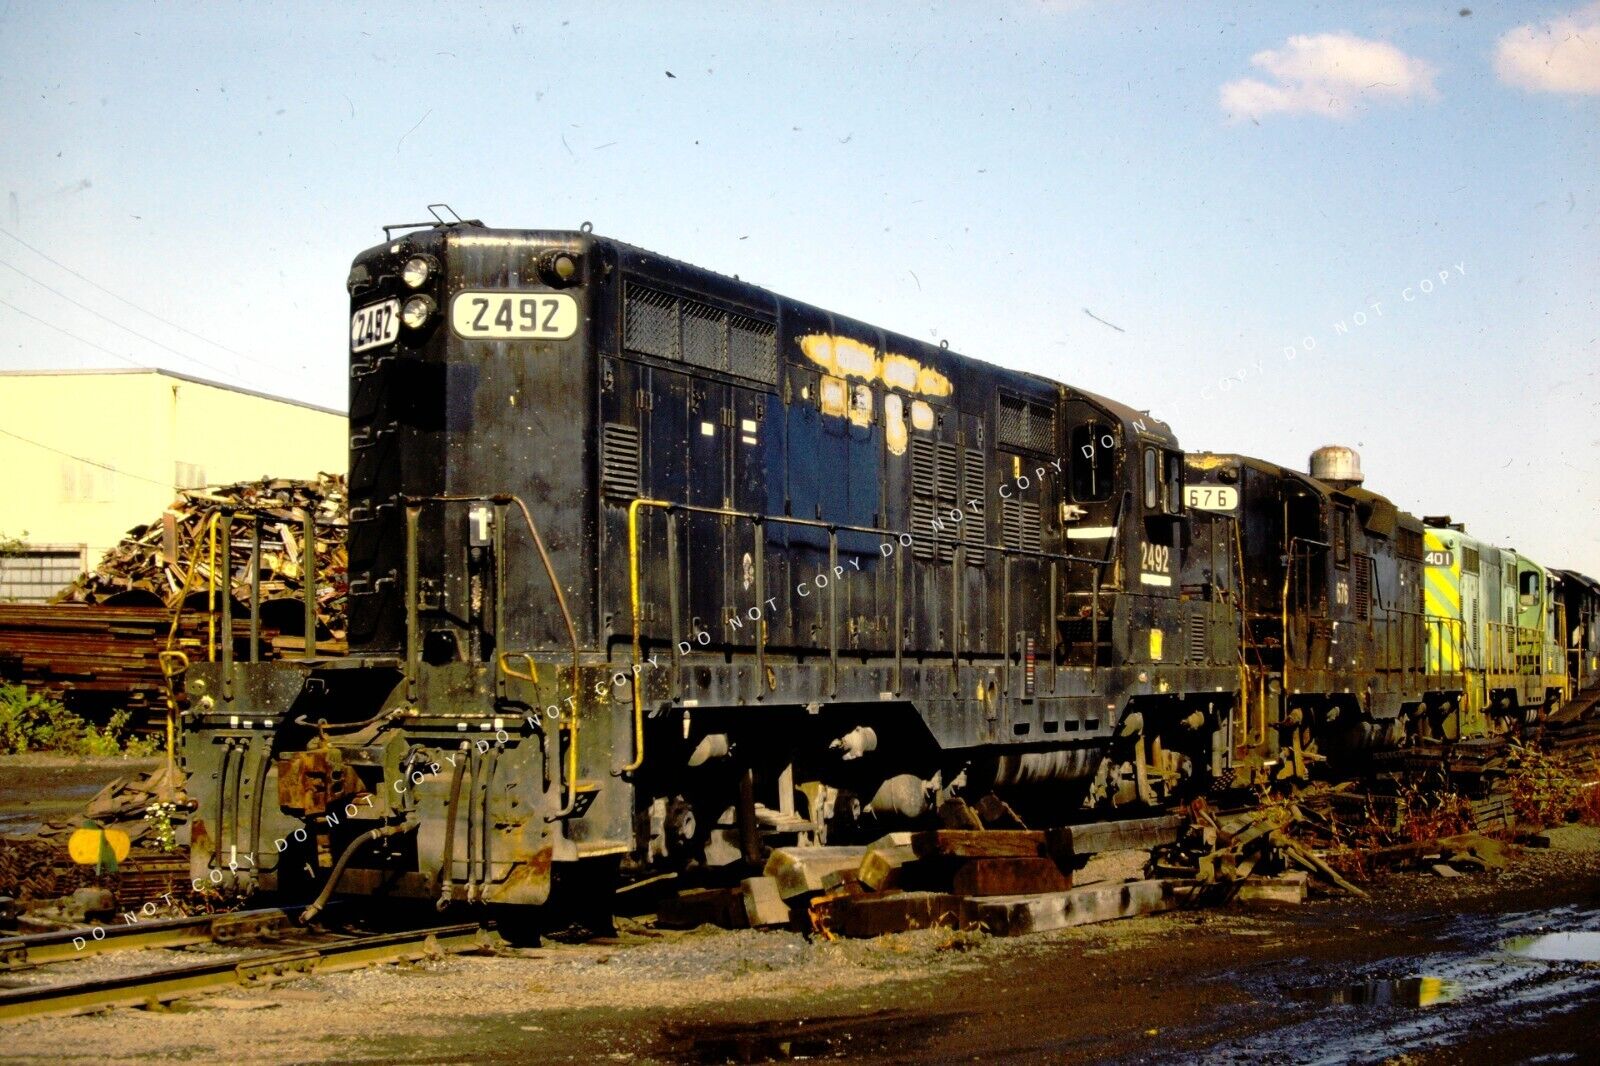 NORFOLK WESTERN - ORIGINAL PHOTO SLIDE  - #  2492 locomotive 1983